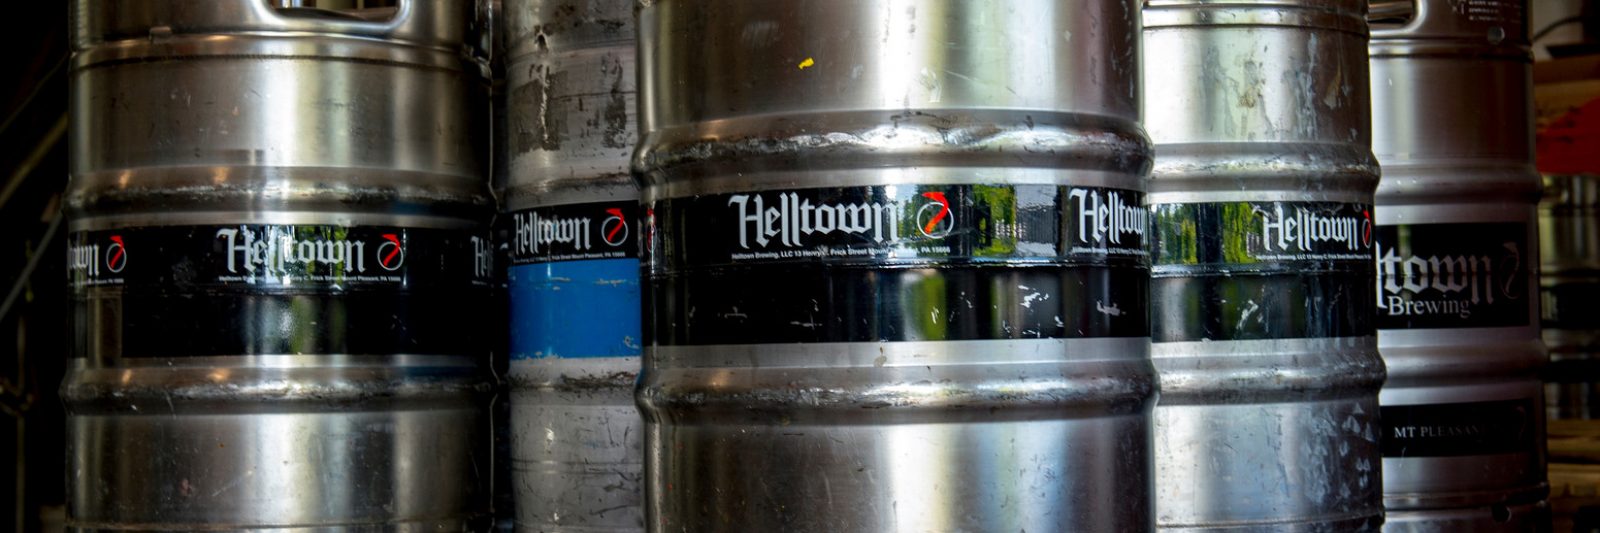 Helltown Brewing Company